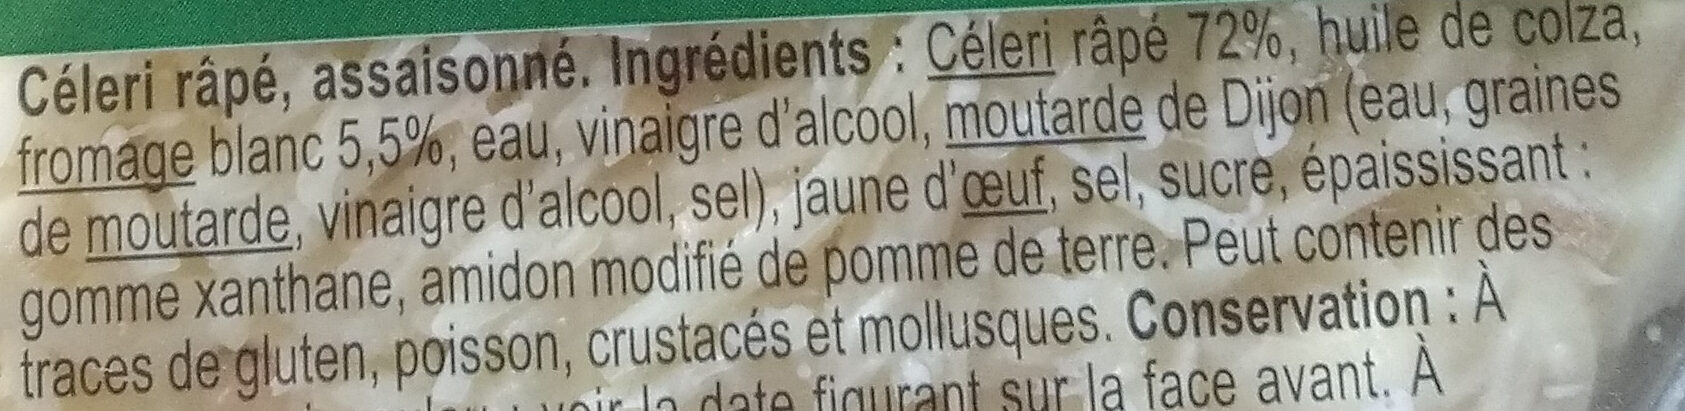 Céleri Rémoulade - Ingredients - fr